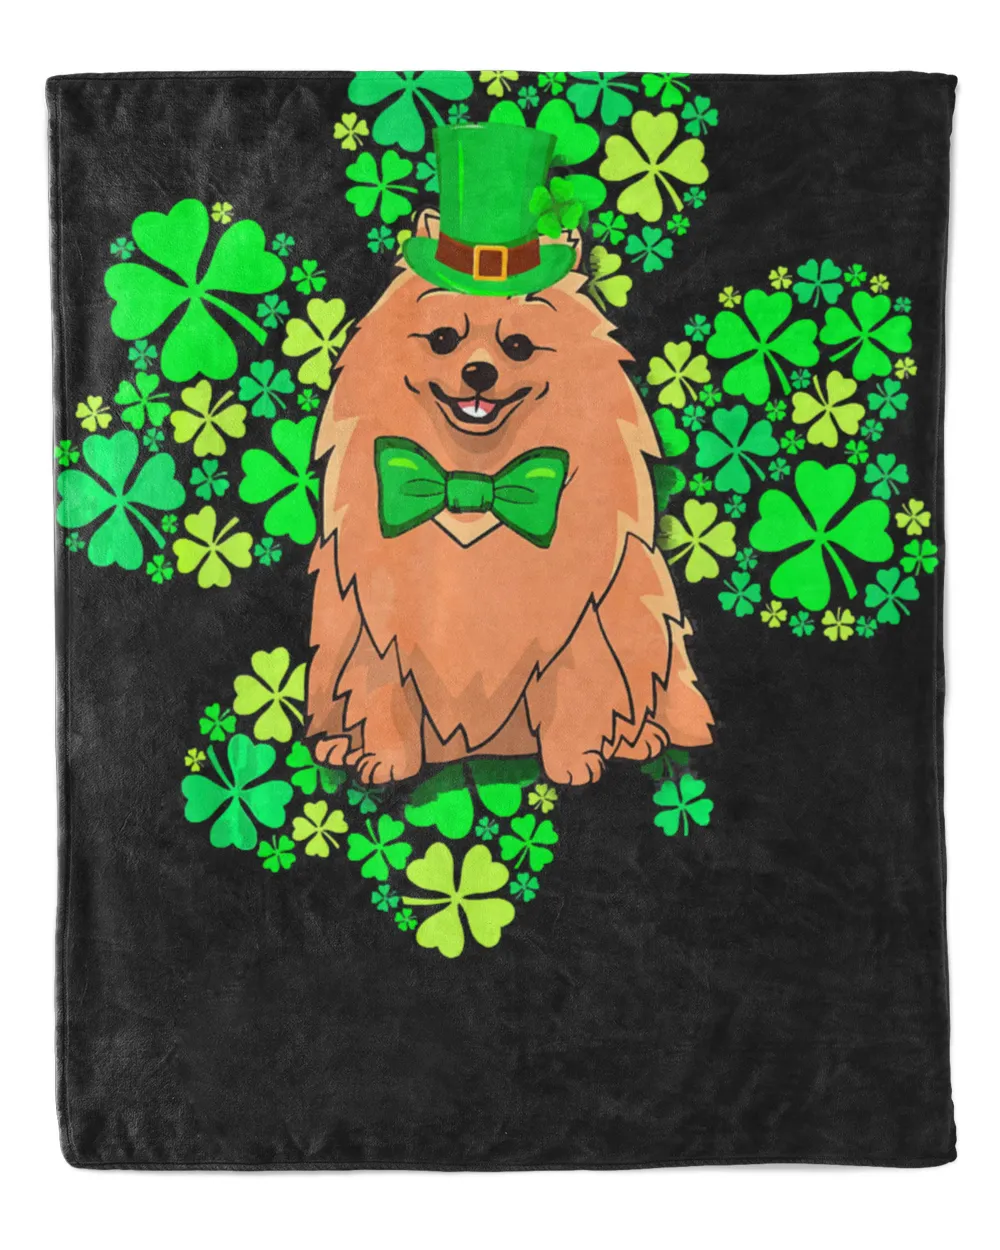 Pomeranian Lucky 4 Leaf Clover St Patricks Day Gift Shirt